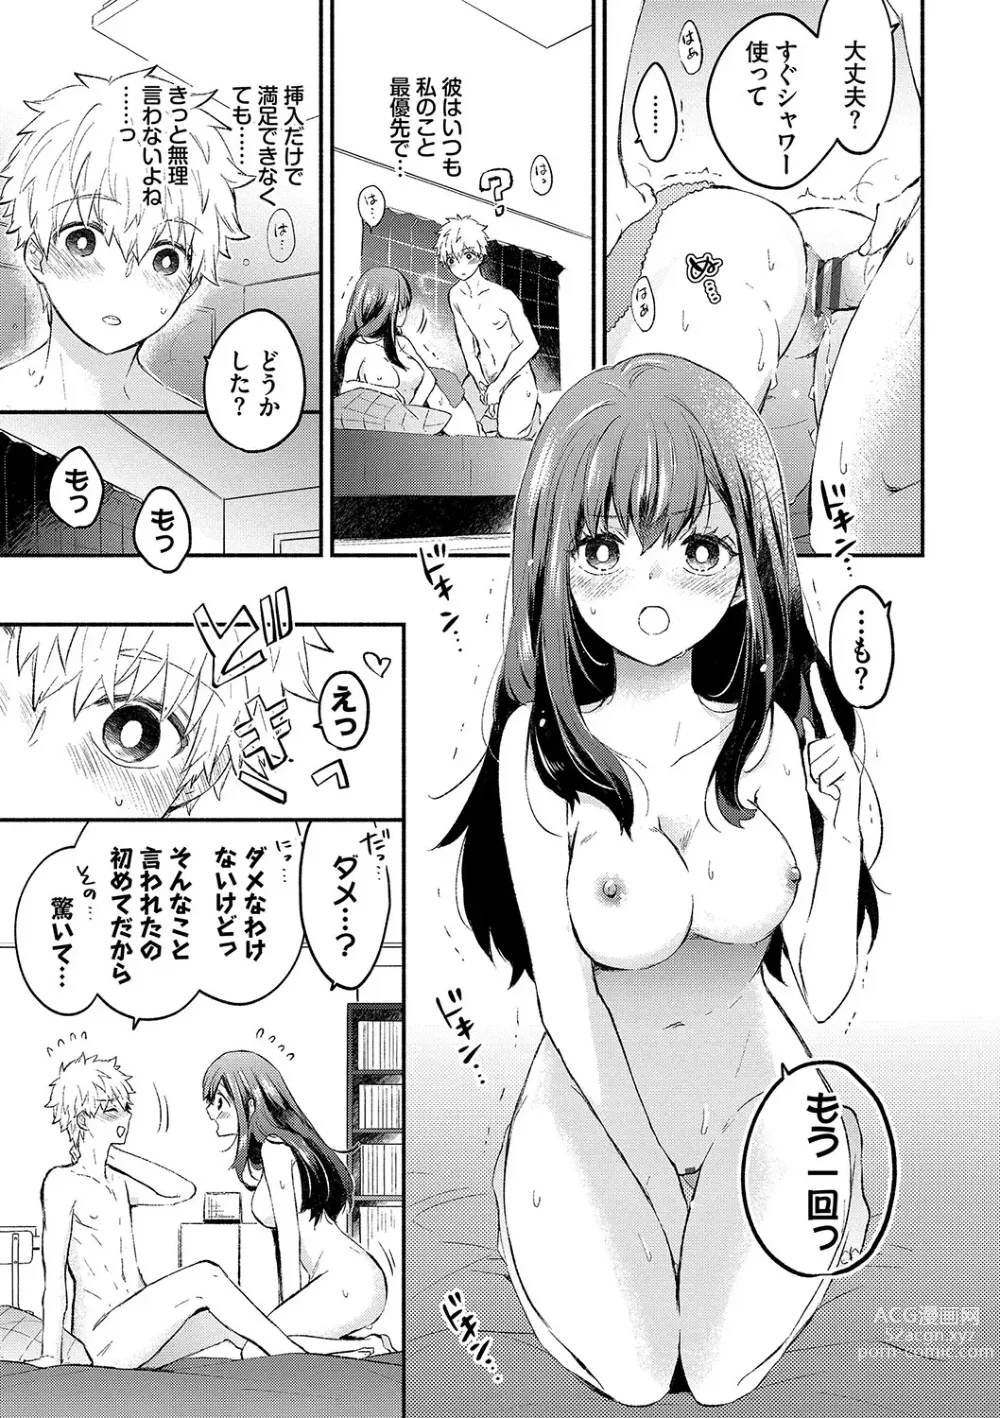 Page 8 of manga Junai Porno - Pure Love Porno